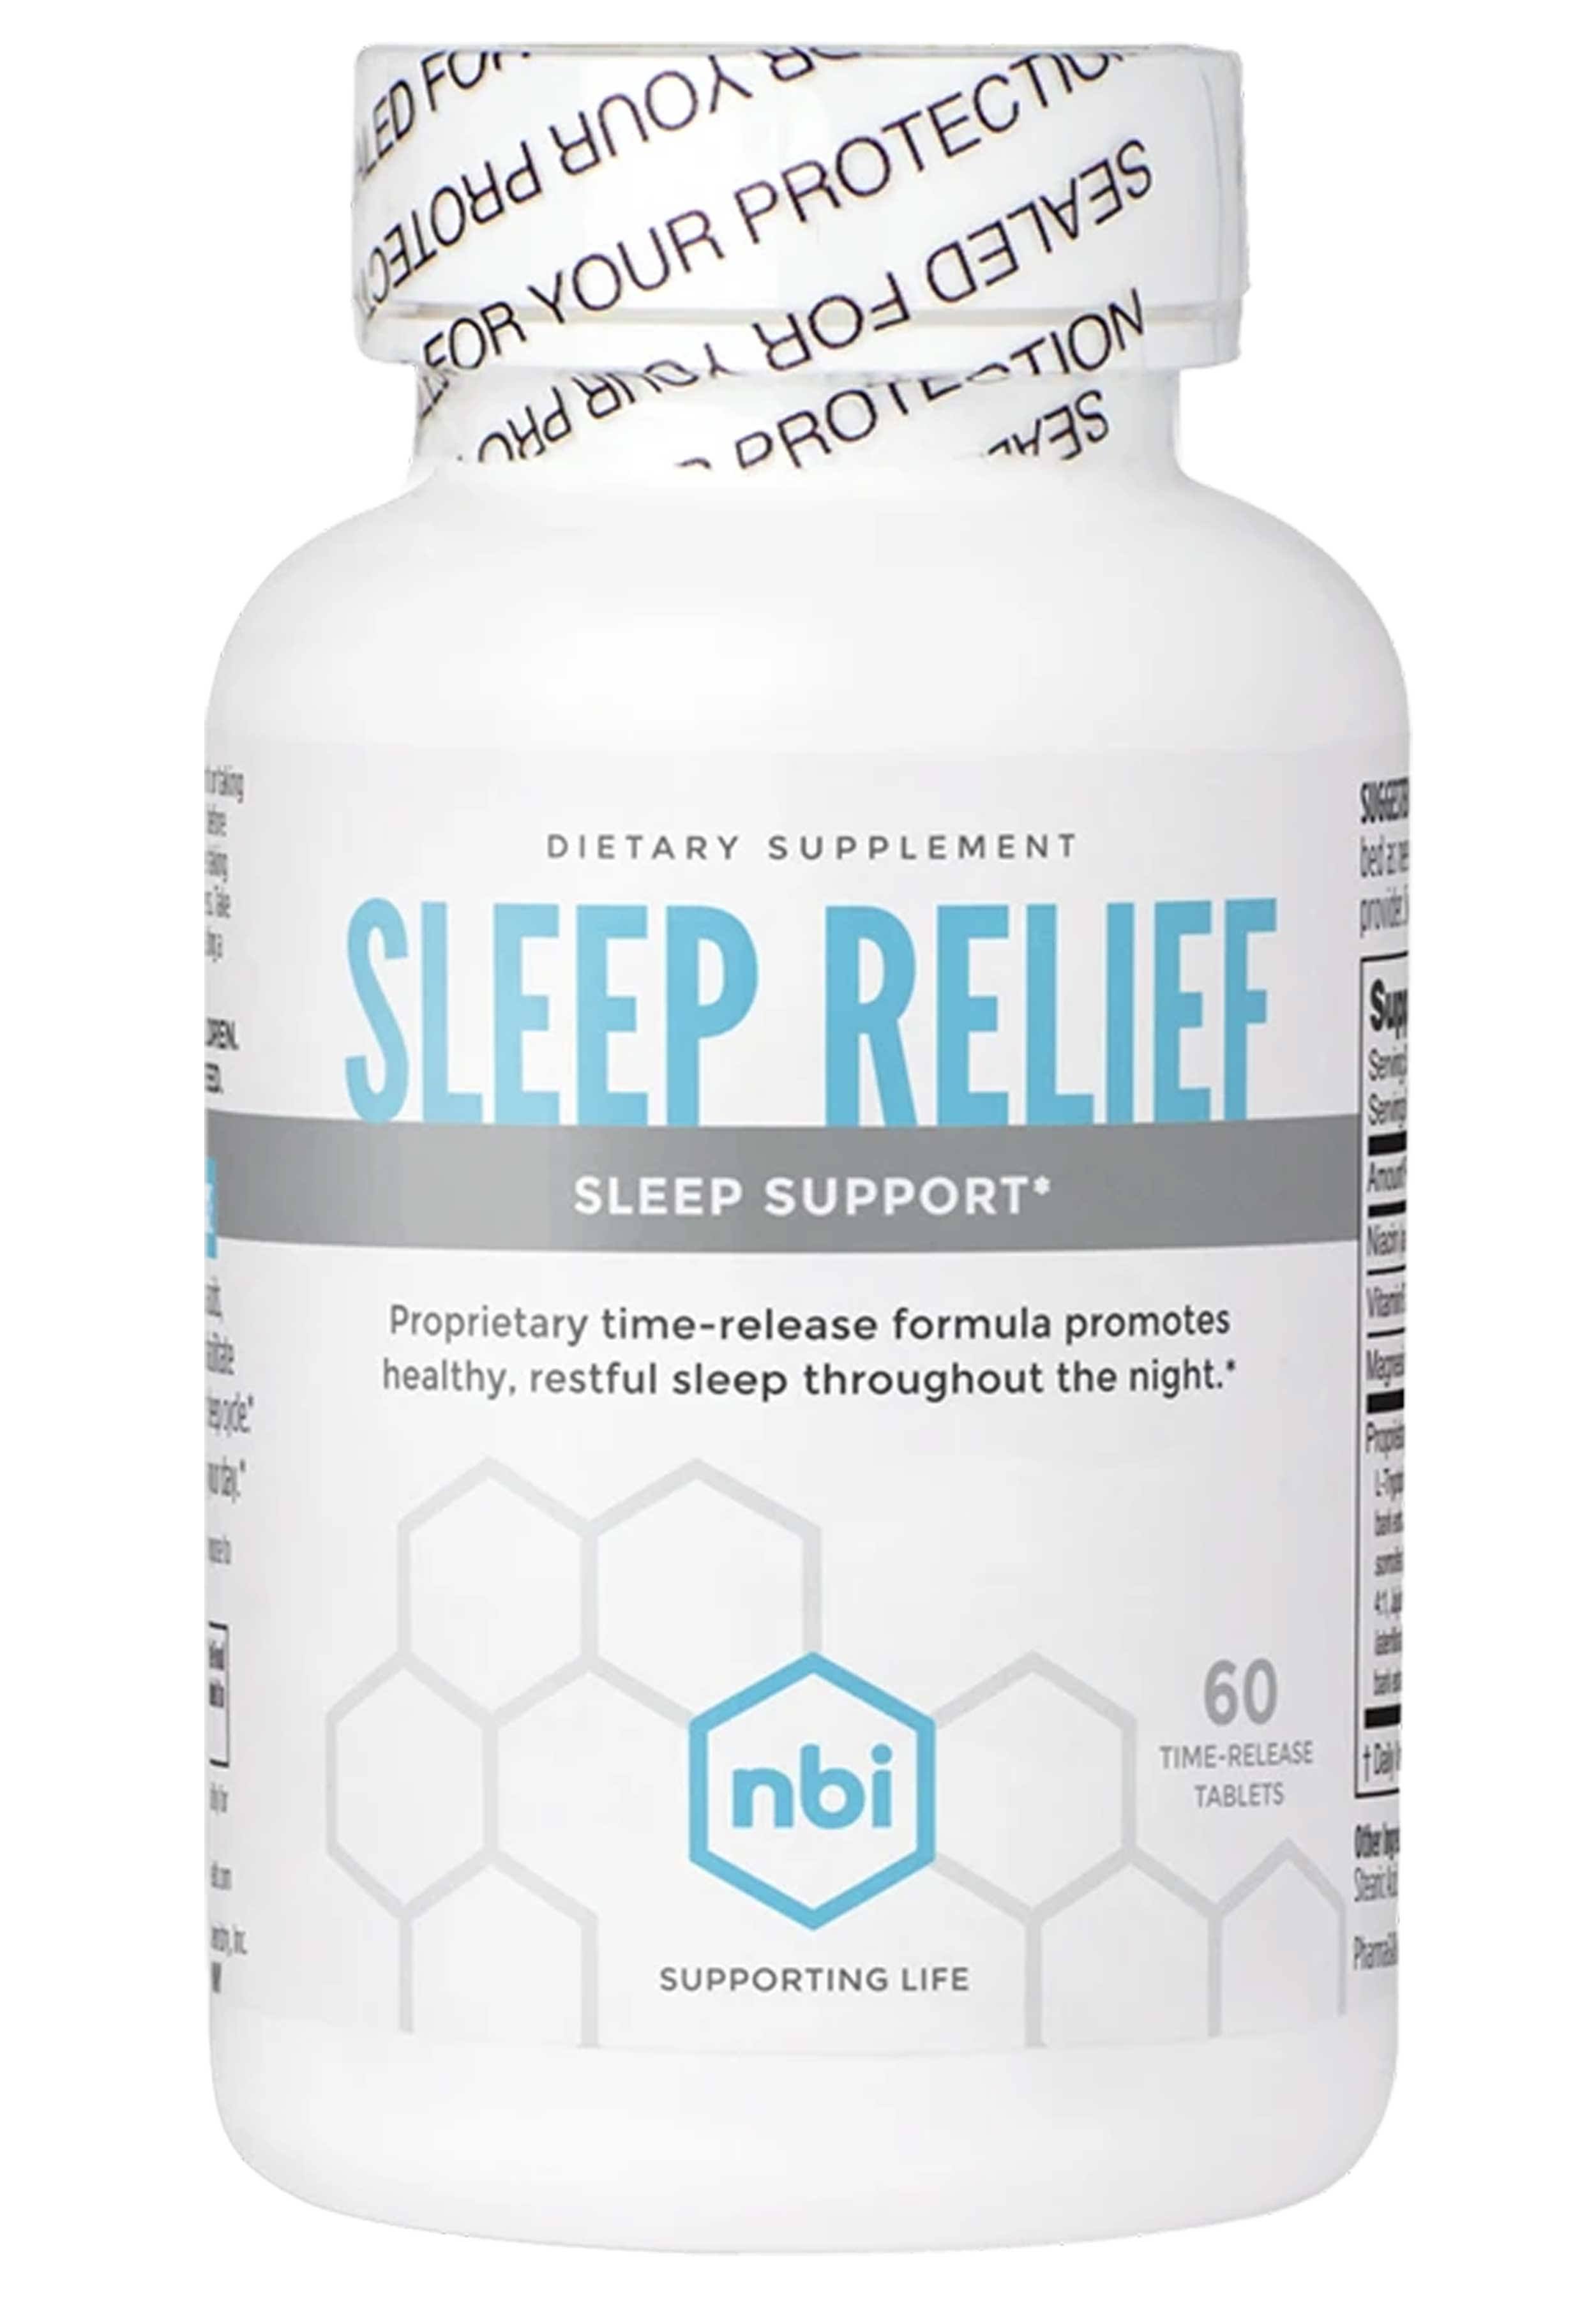 NBI Sleep Relief - 60 Time-Release Tablets